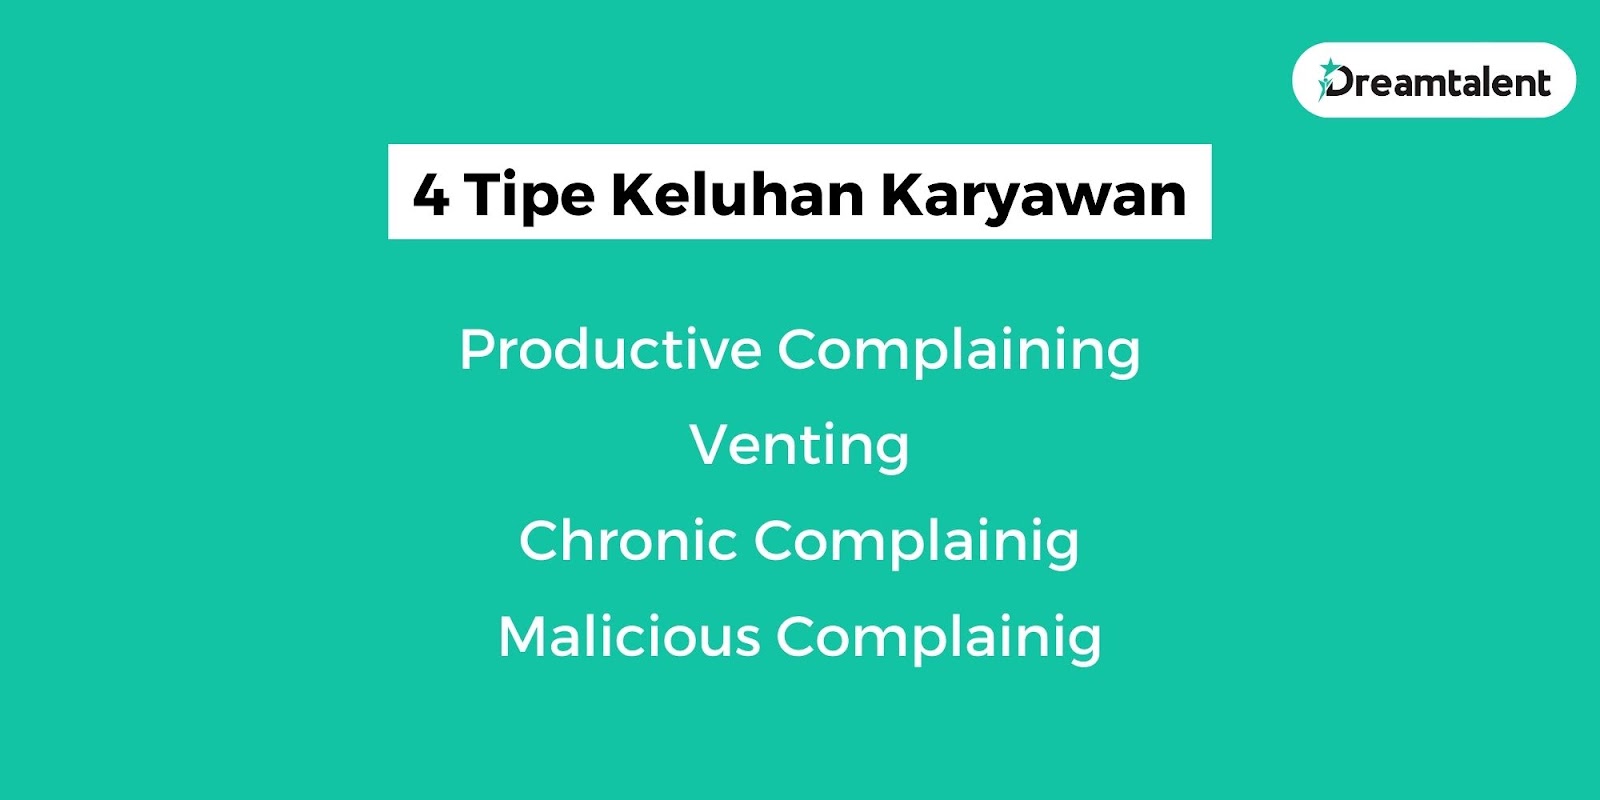 Terdapat 4 tipe keluhan karyawan, yaitu productive complaining, venting, chronic complaining, dan malicious complaining.